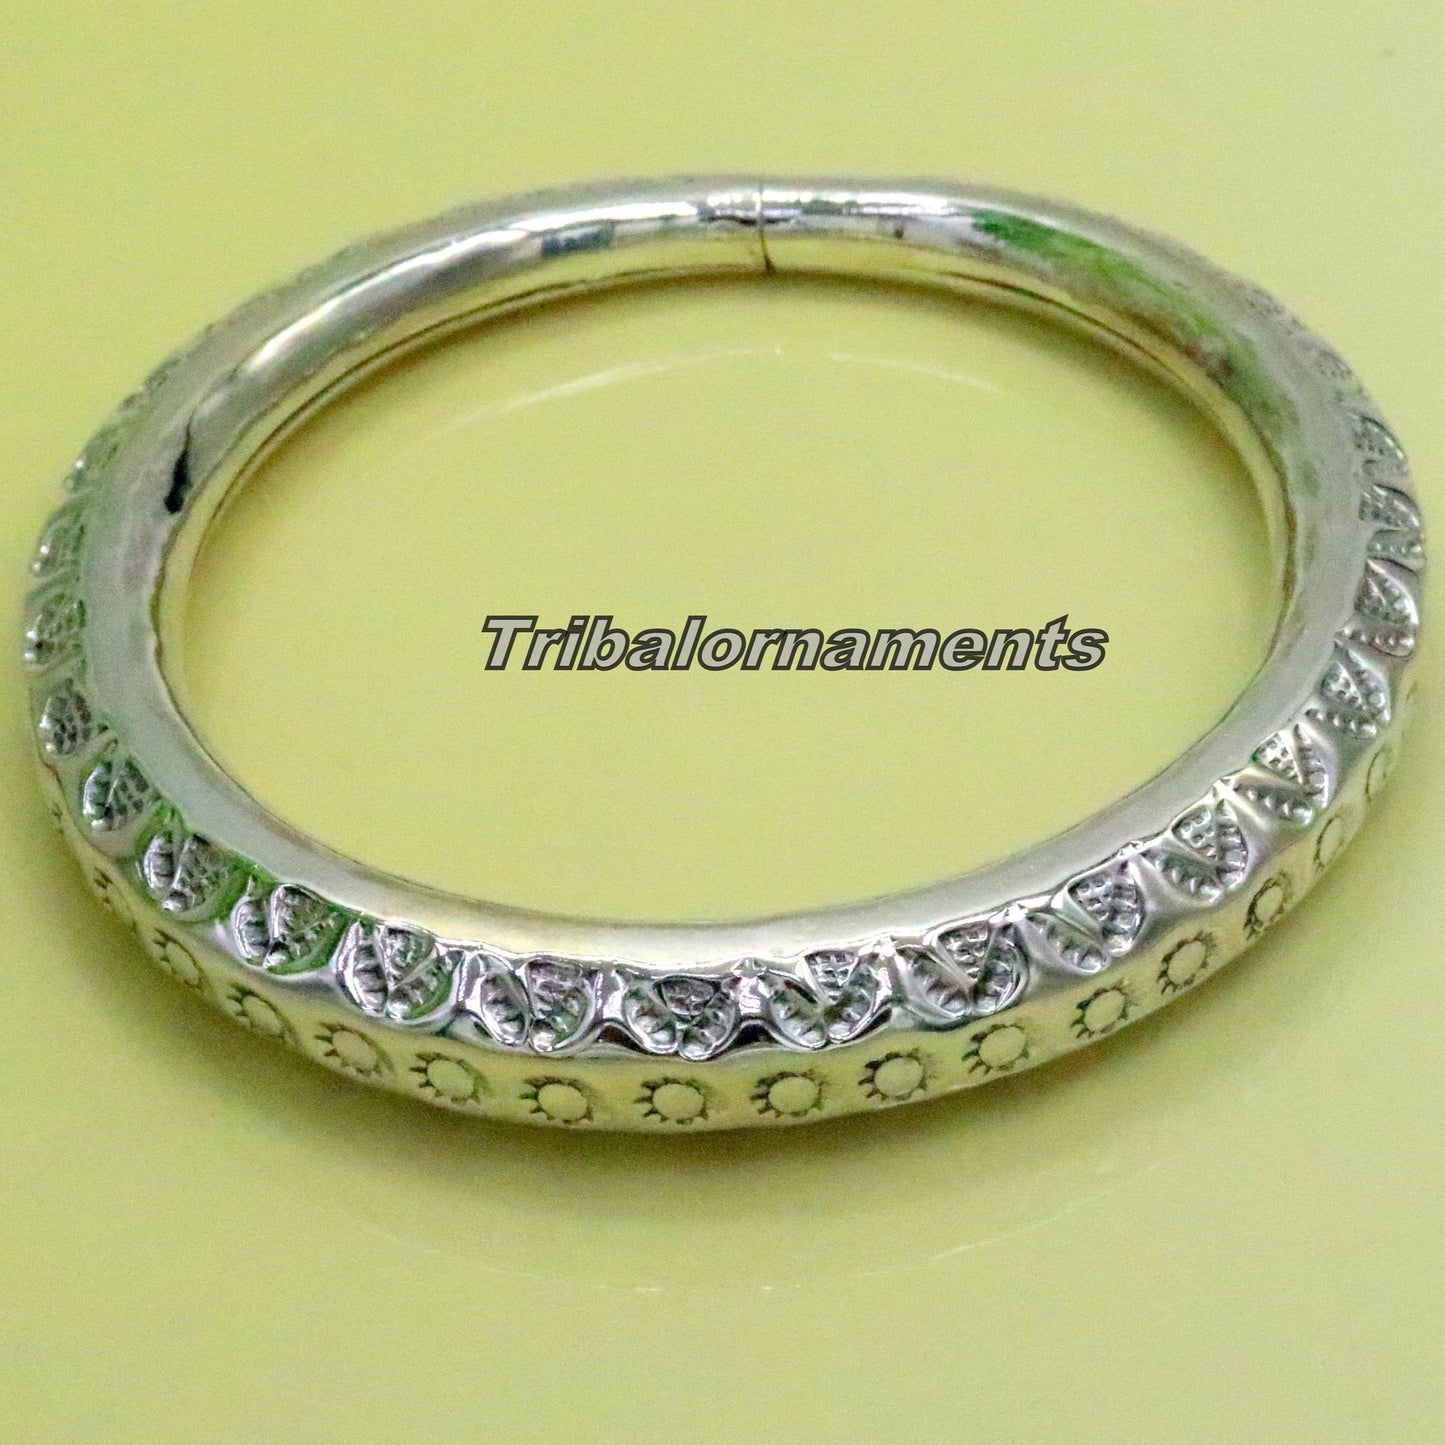 Vintage design handmade fabulous 925 sterling silver bangle bracelet kada unisex jewelry, awesome customized oxidized trendy jewelry nsk244 - TRIBAL ORNAMENTS